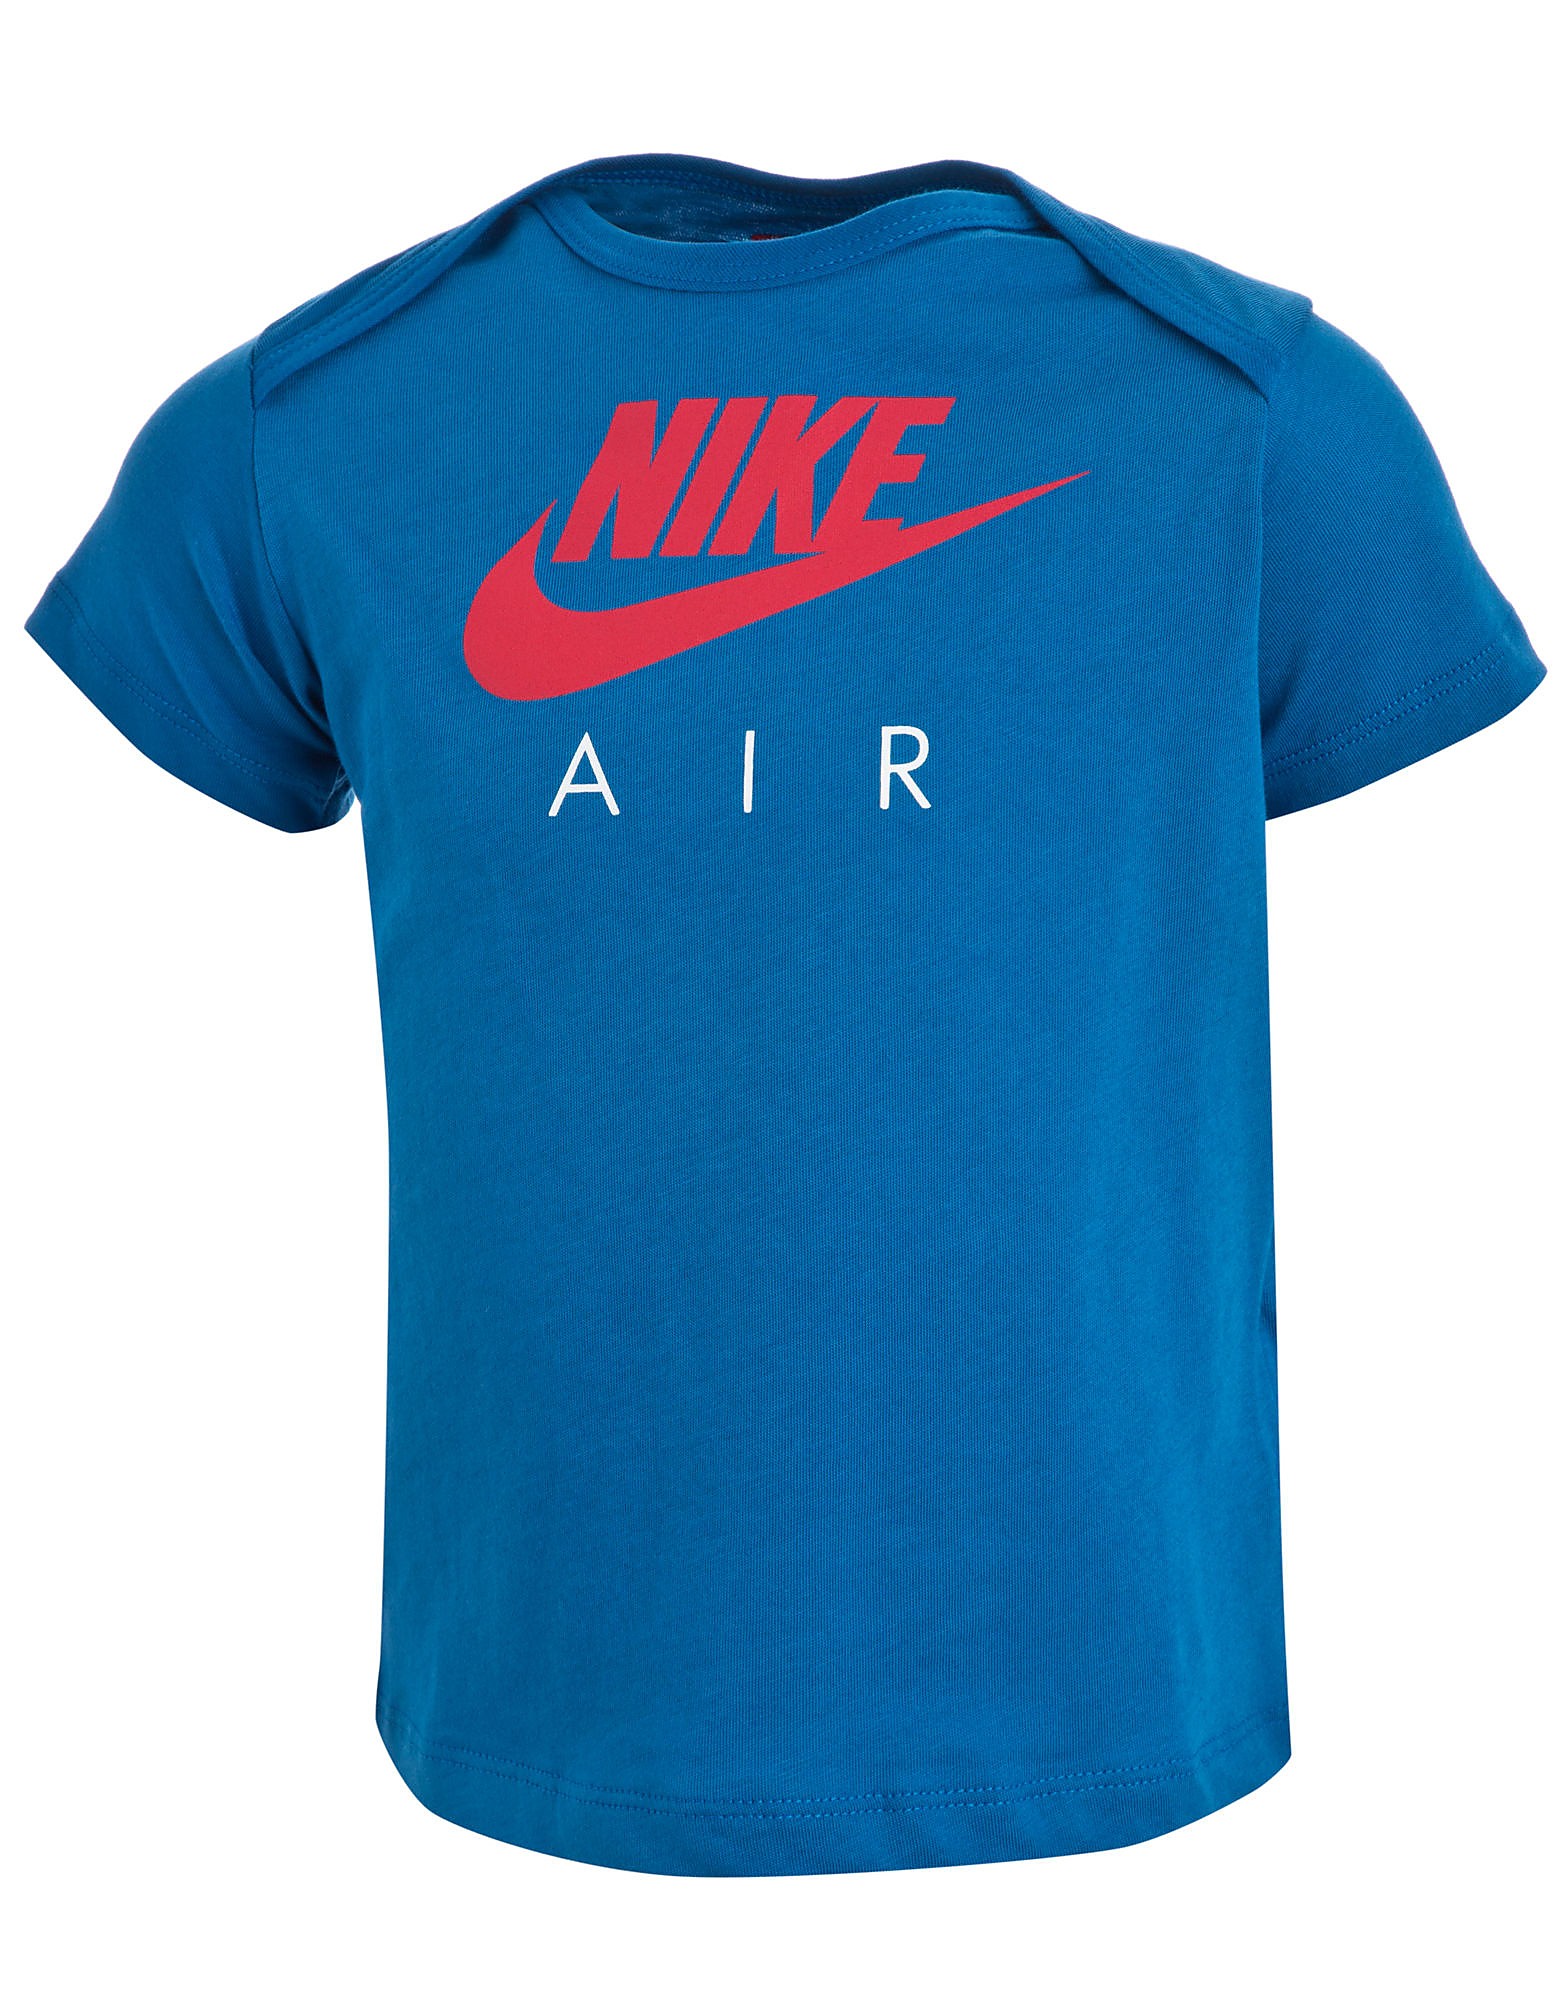 Nike Air T-Shirt Infants